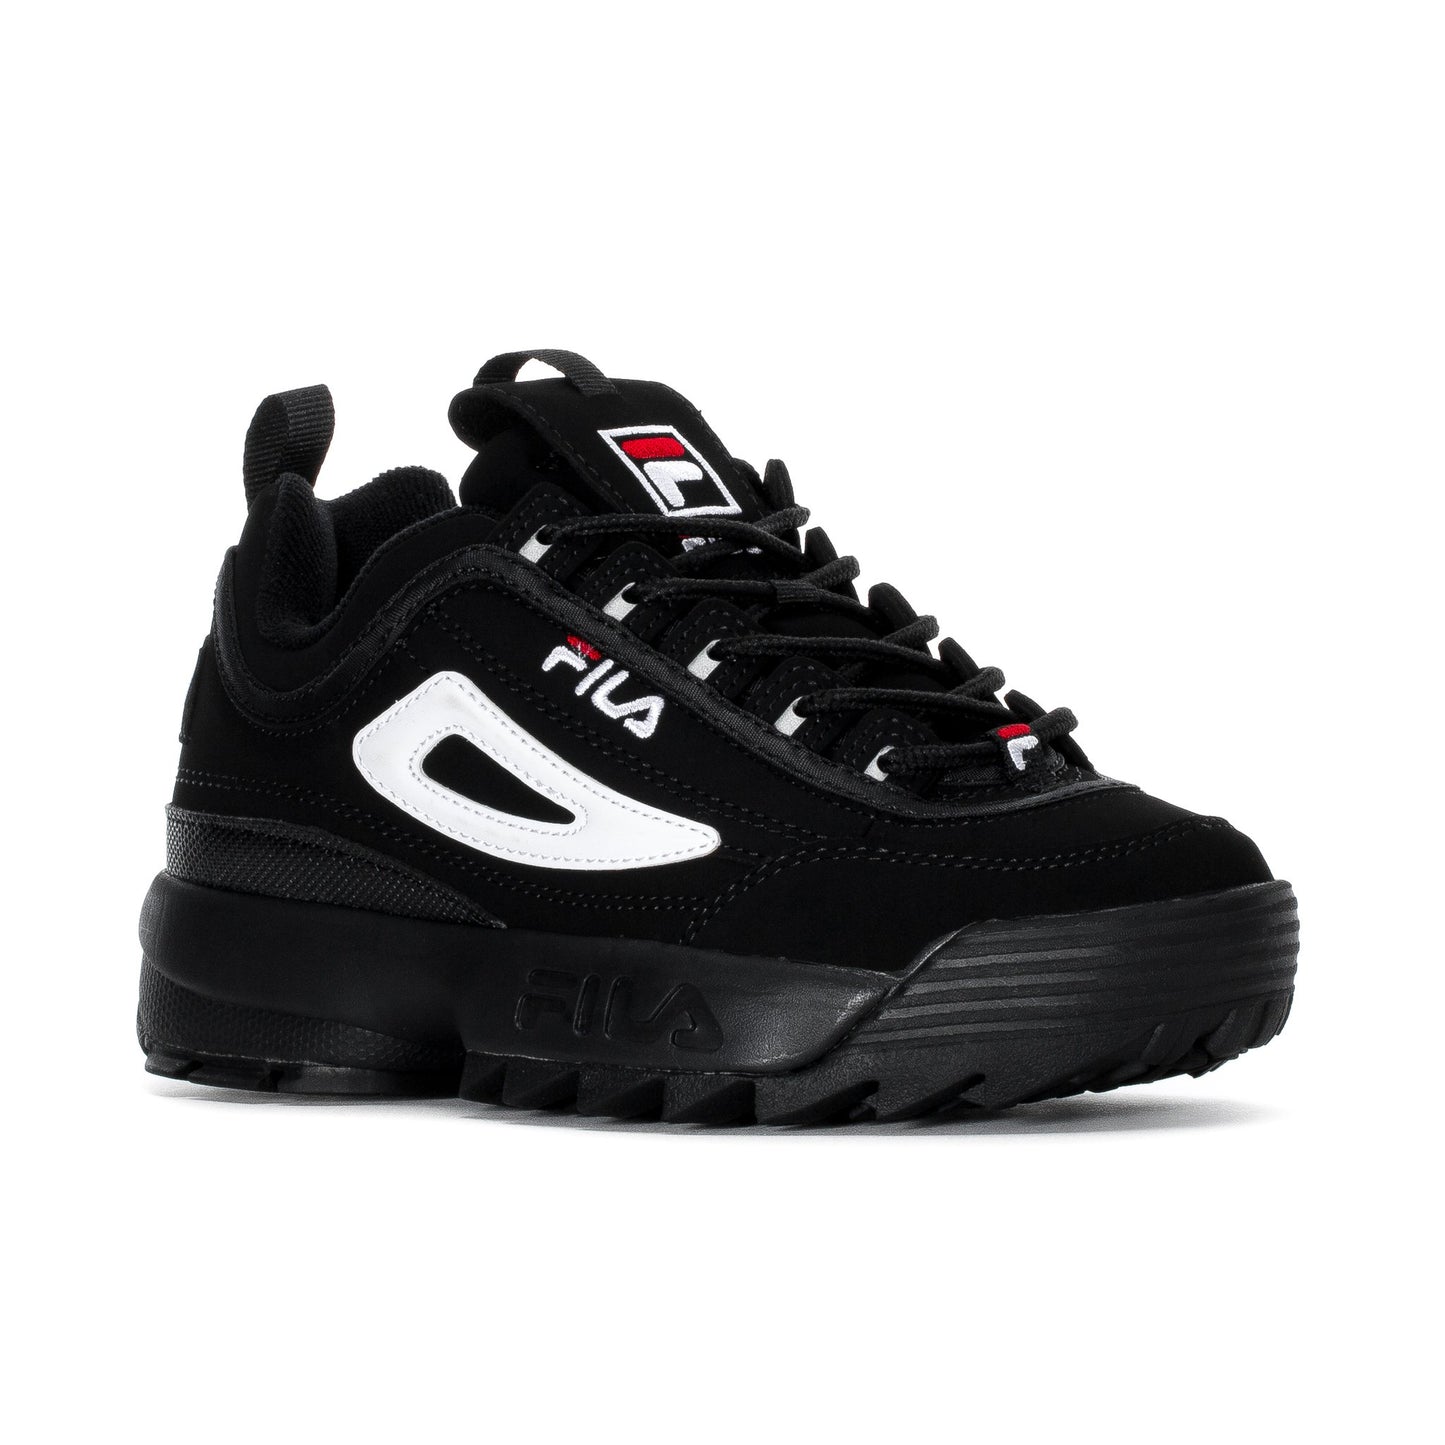 Fila Disruptor II Grade School Shoes Black/White/Red FW04544-014